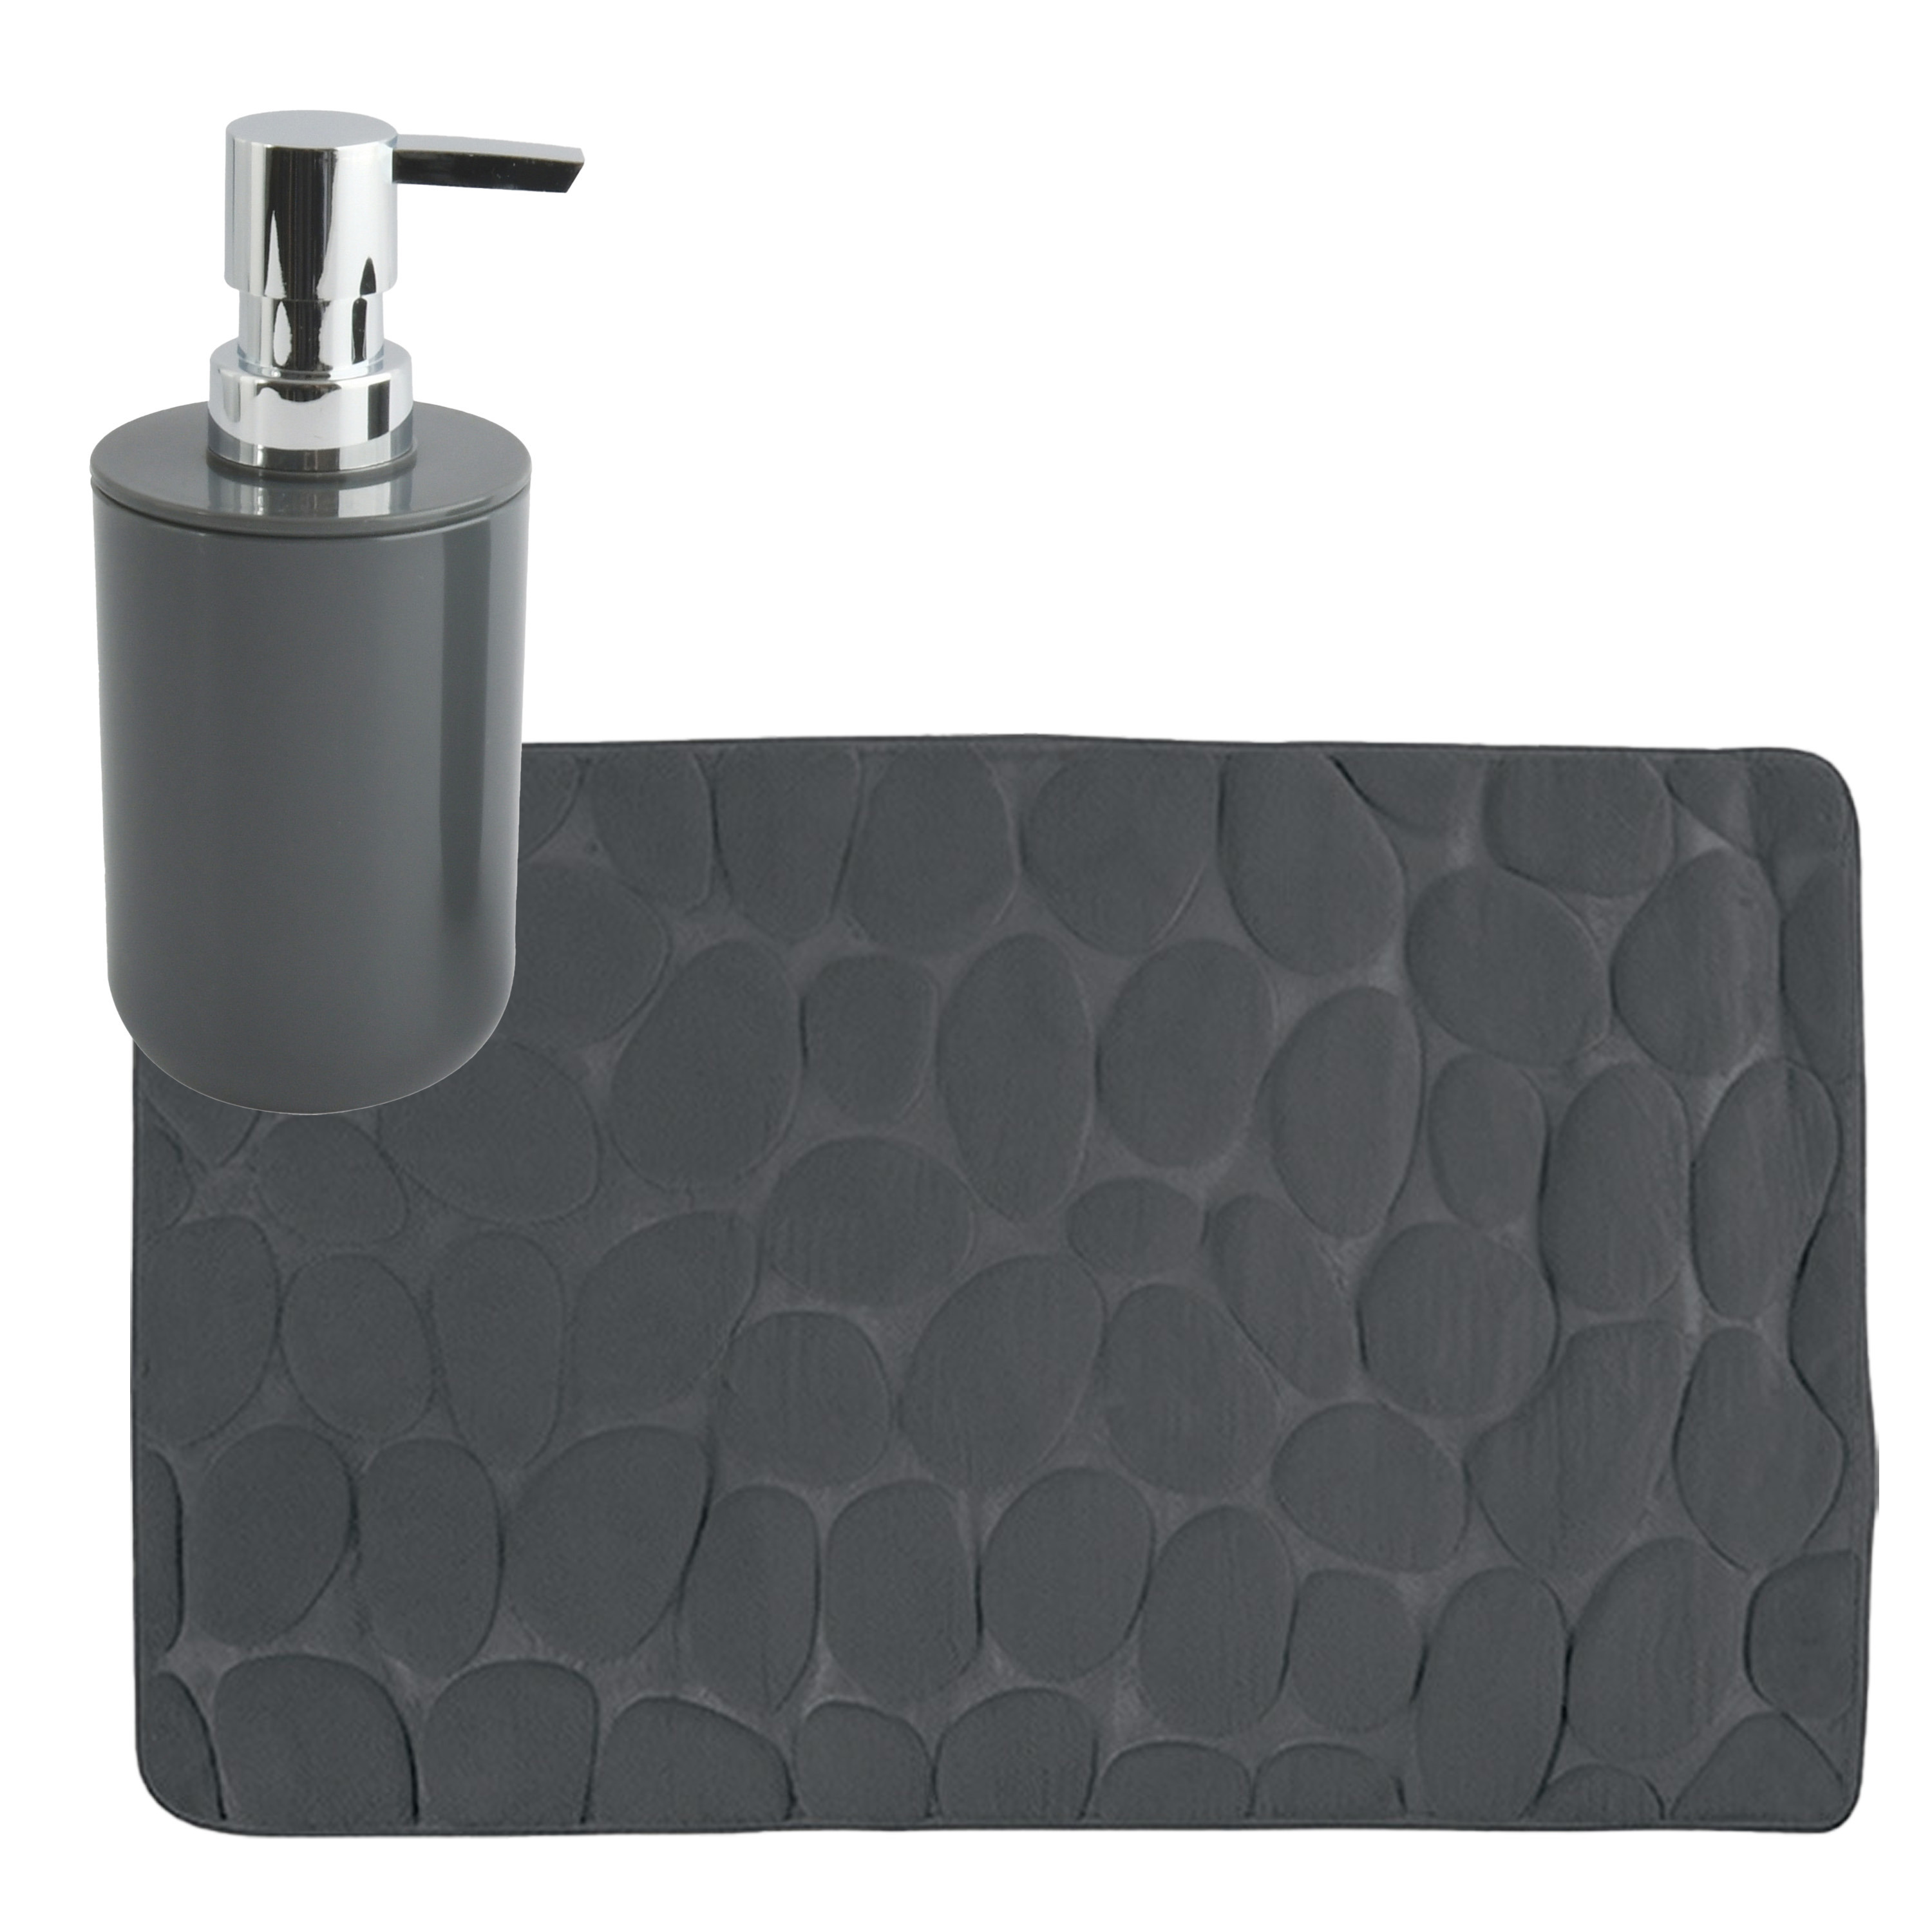 MSV badkamer droogloop mat-tapijt Kiezel 50 x 80 cm zelfde kleur zeeppompje donkergrijs